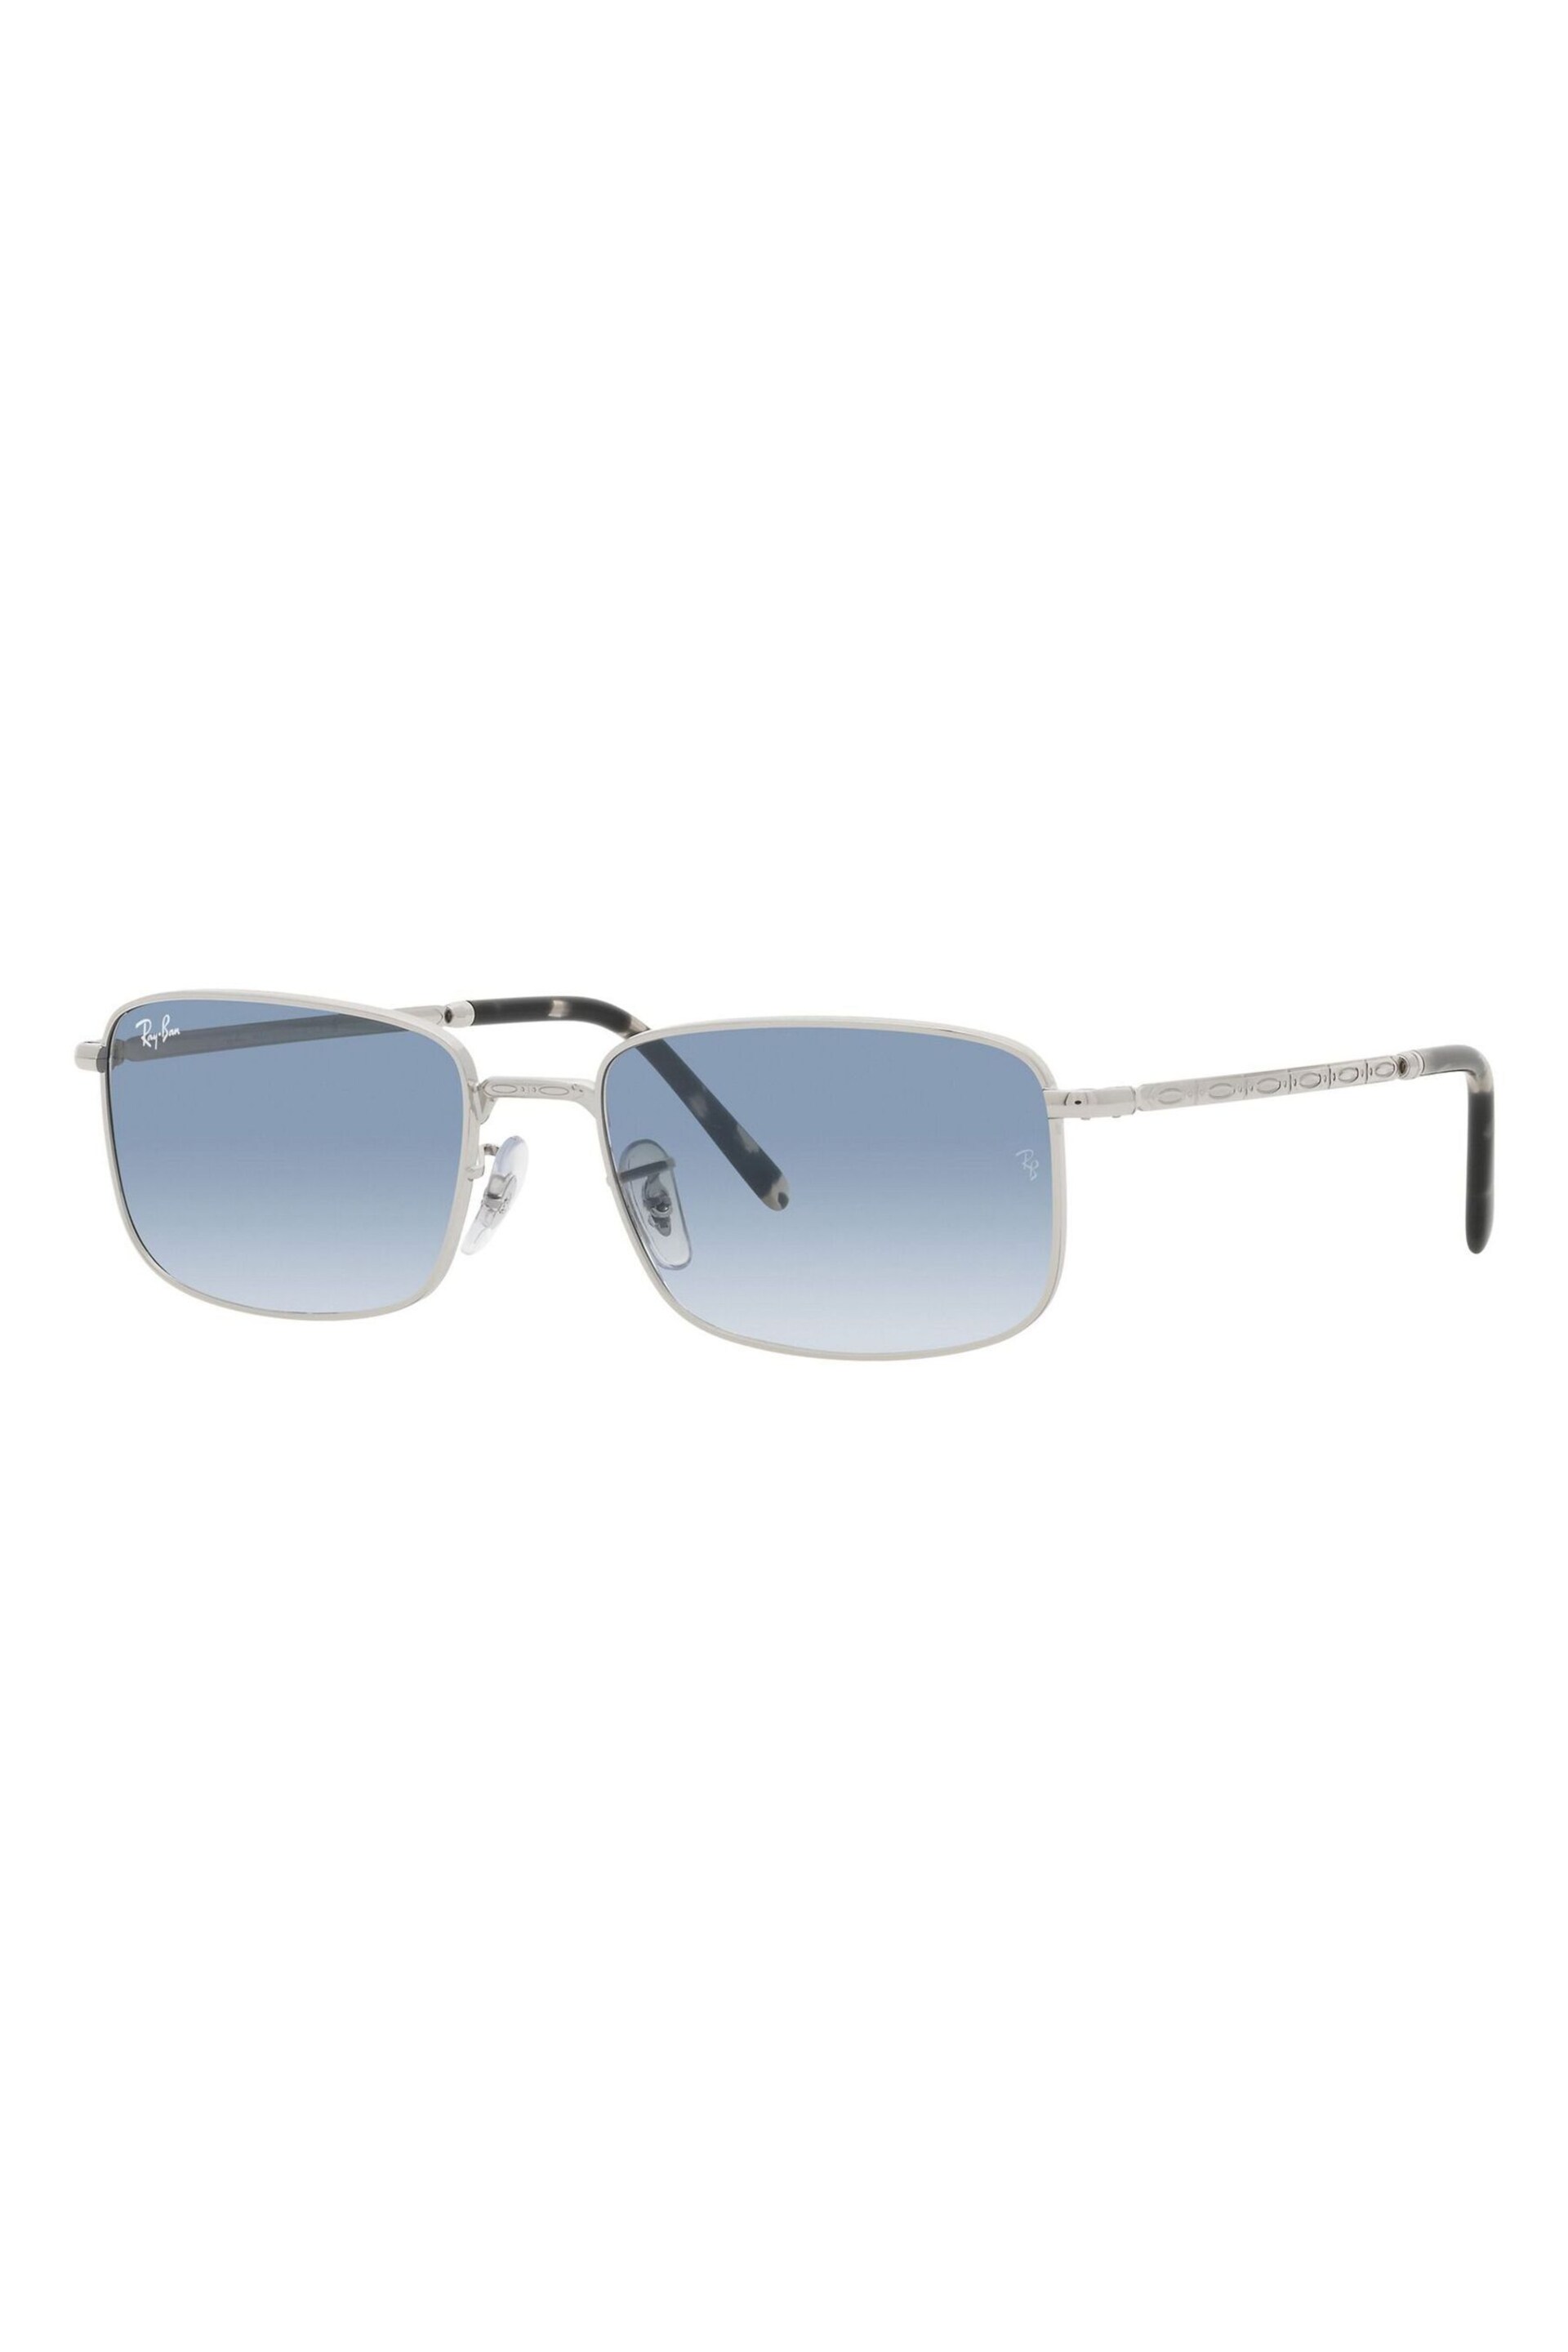 Ray-Ban Silver Sunglasses - Image 3 of 11